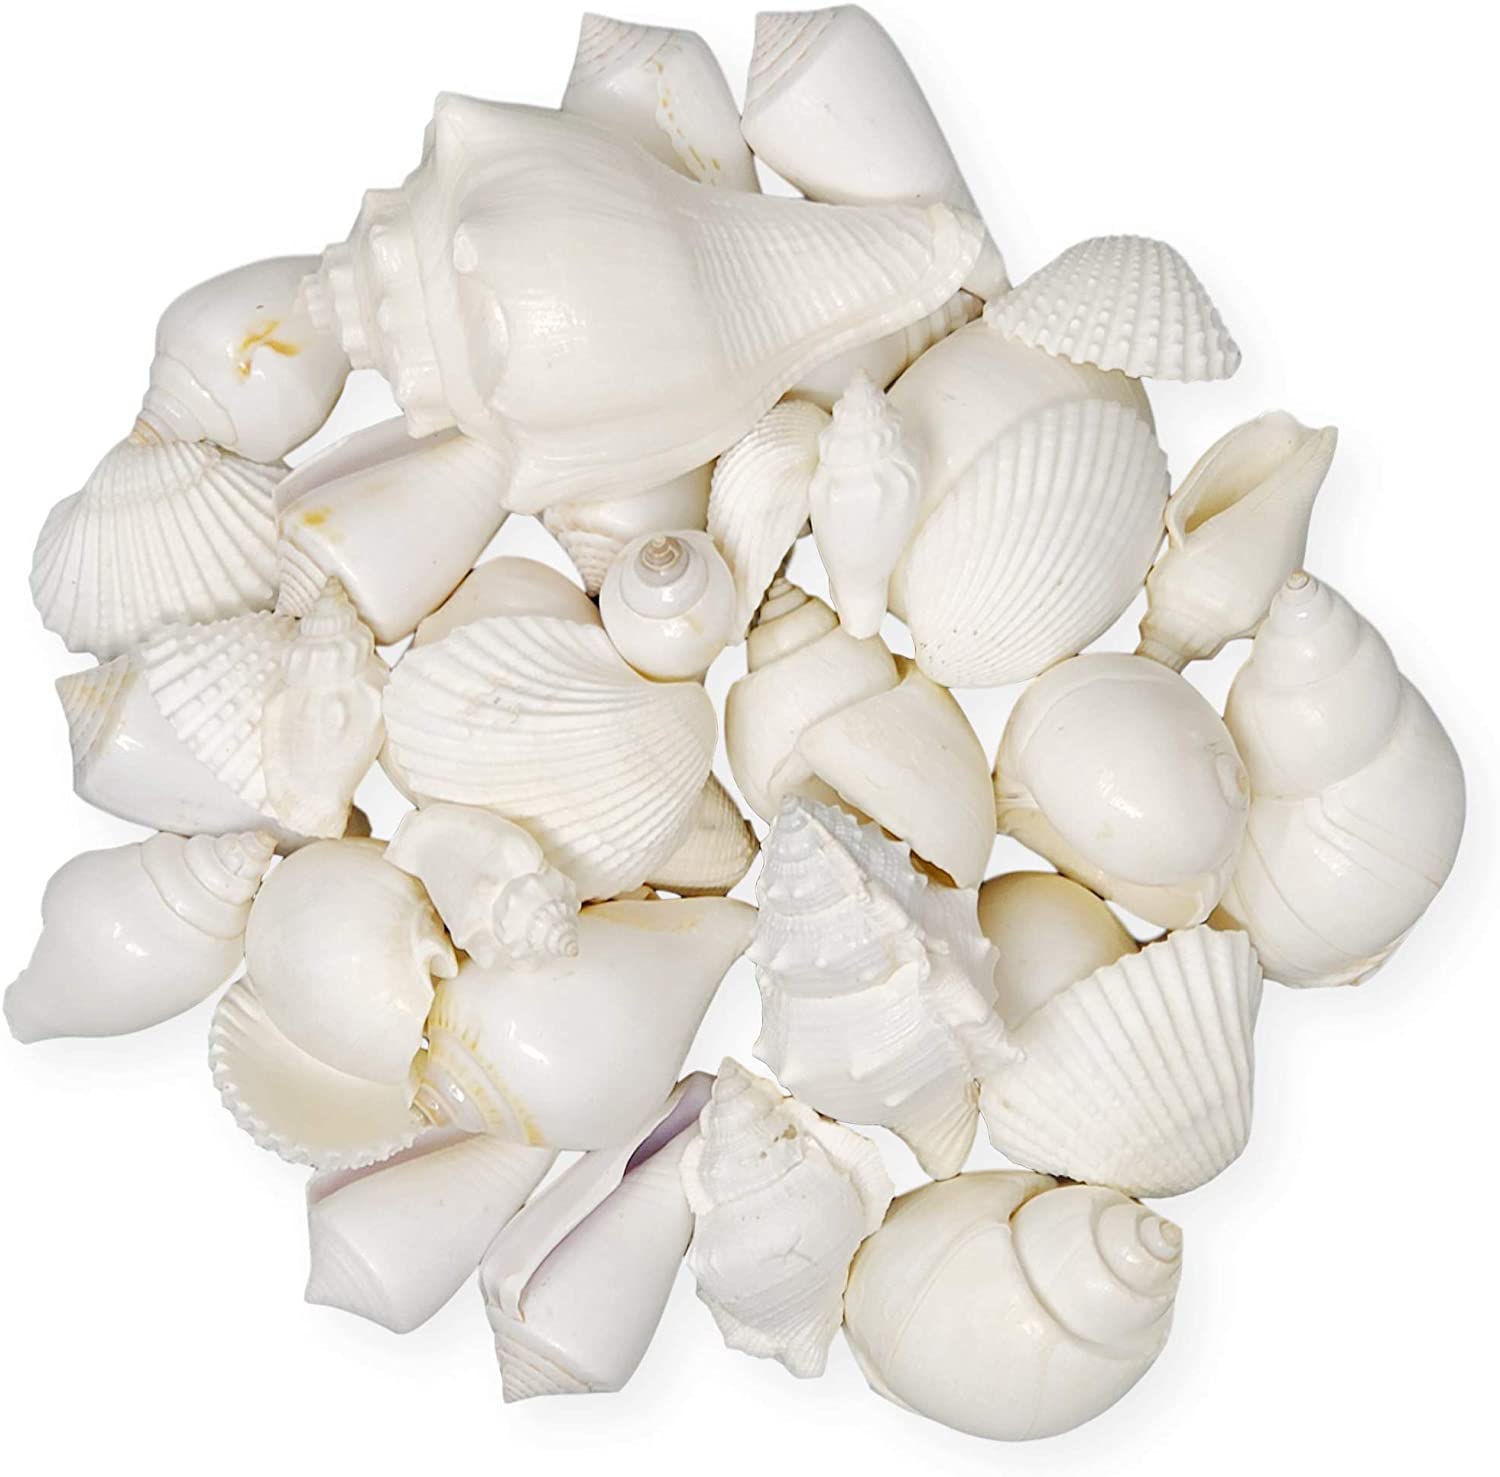 Mix of White Seashells